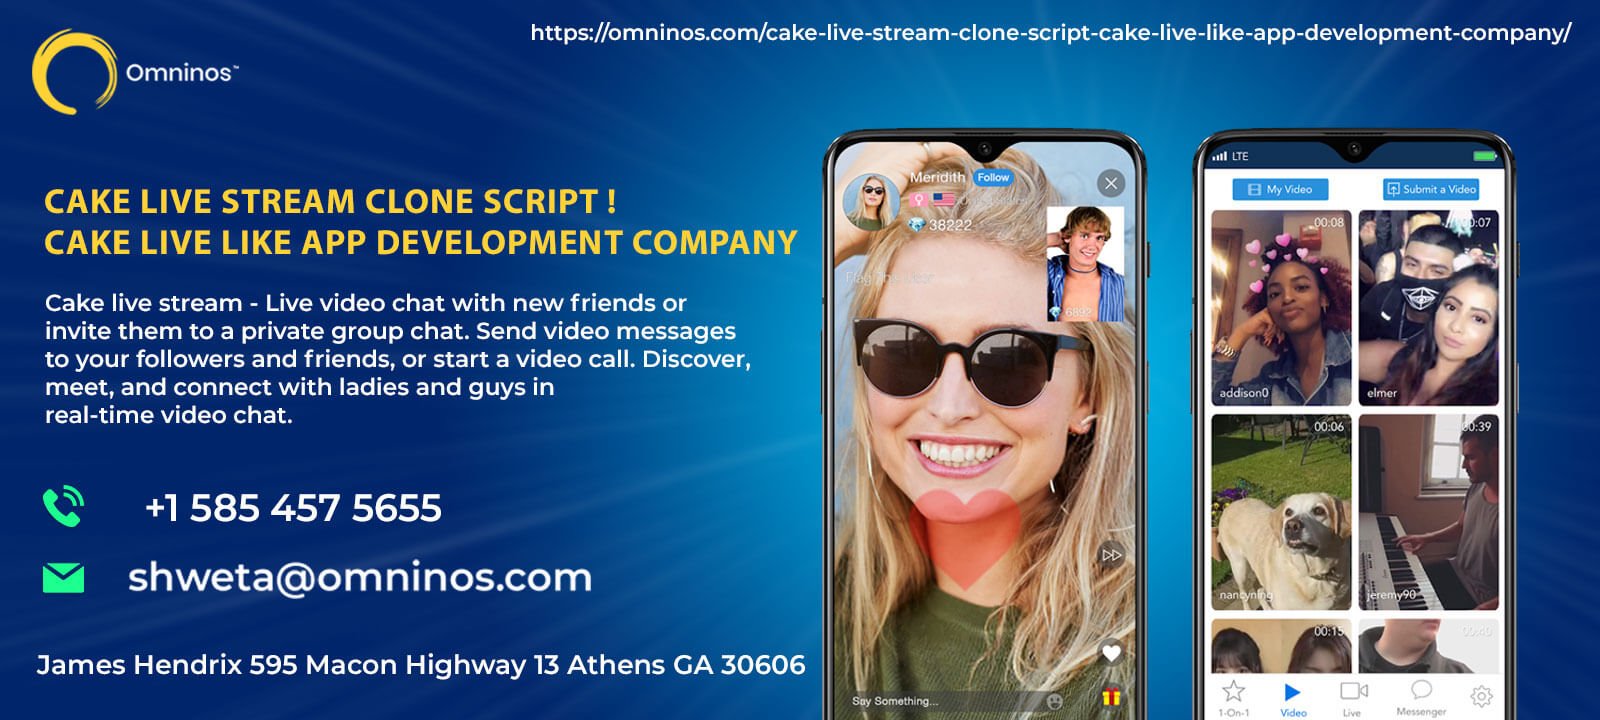 Cake live like app development company